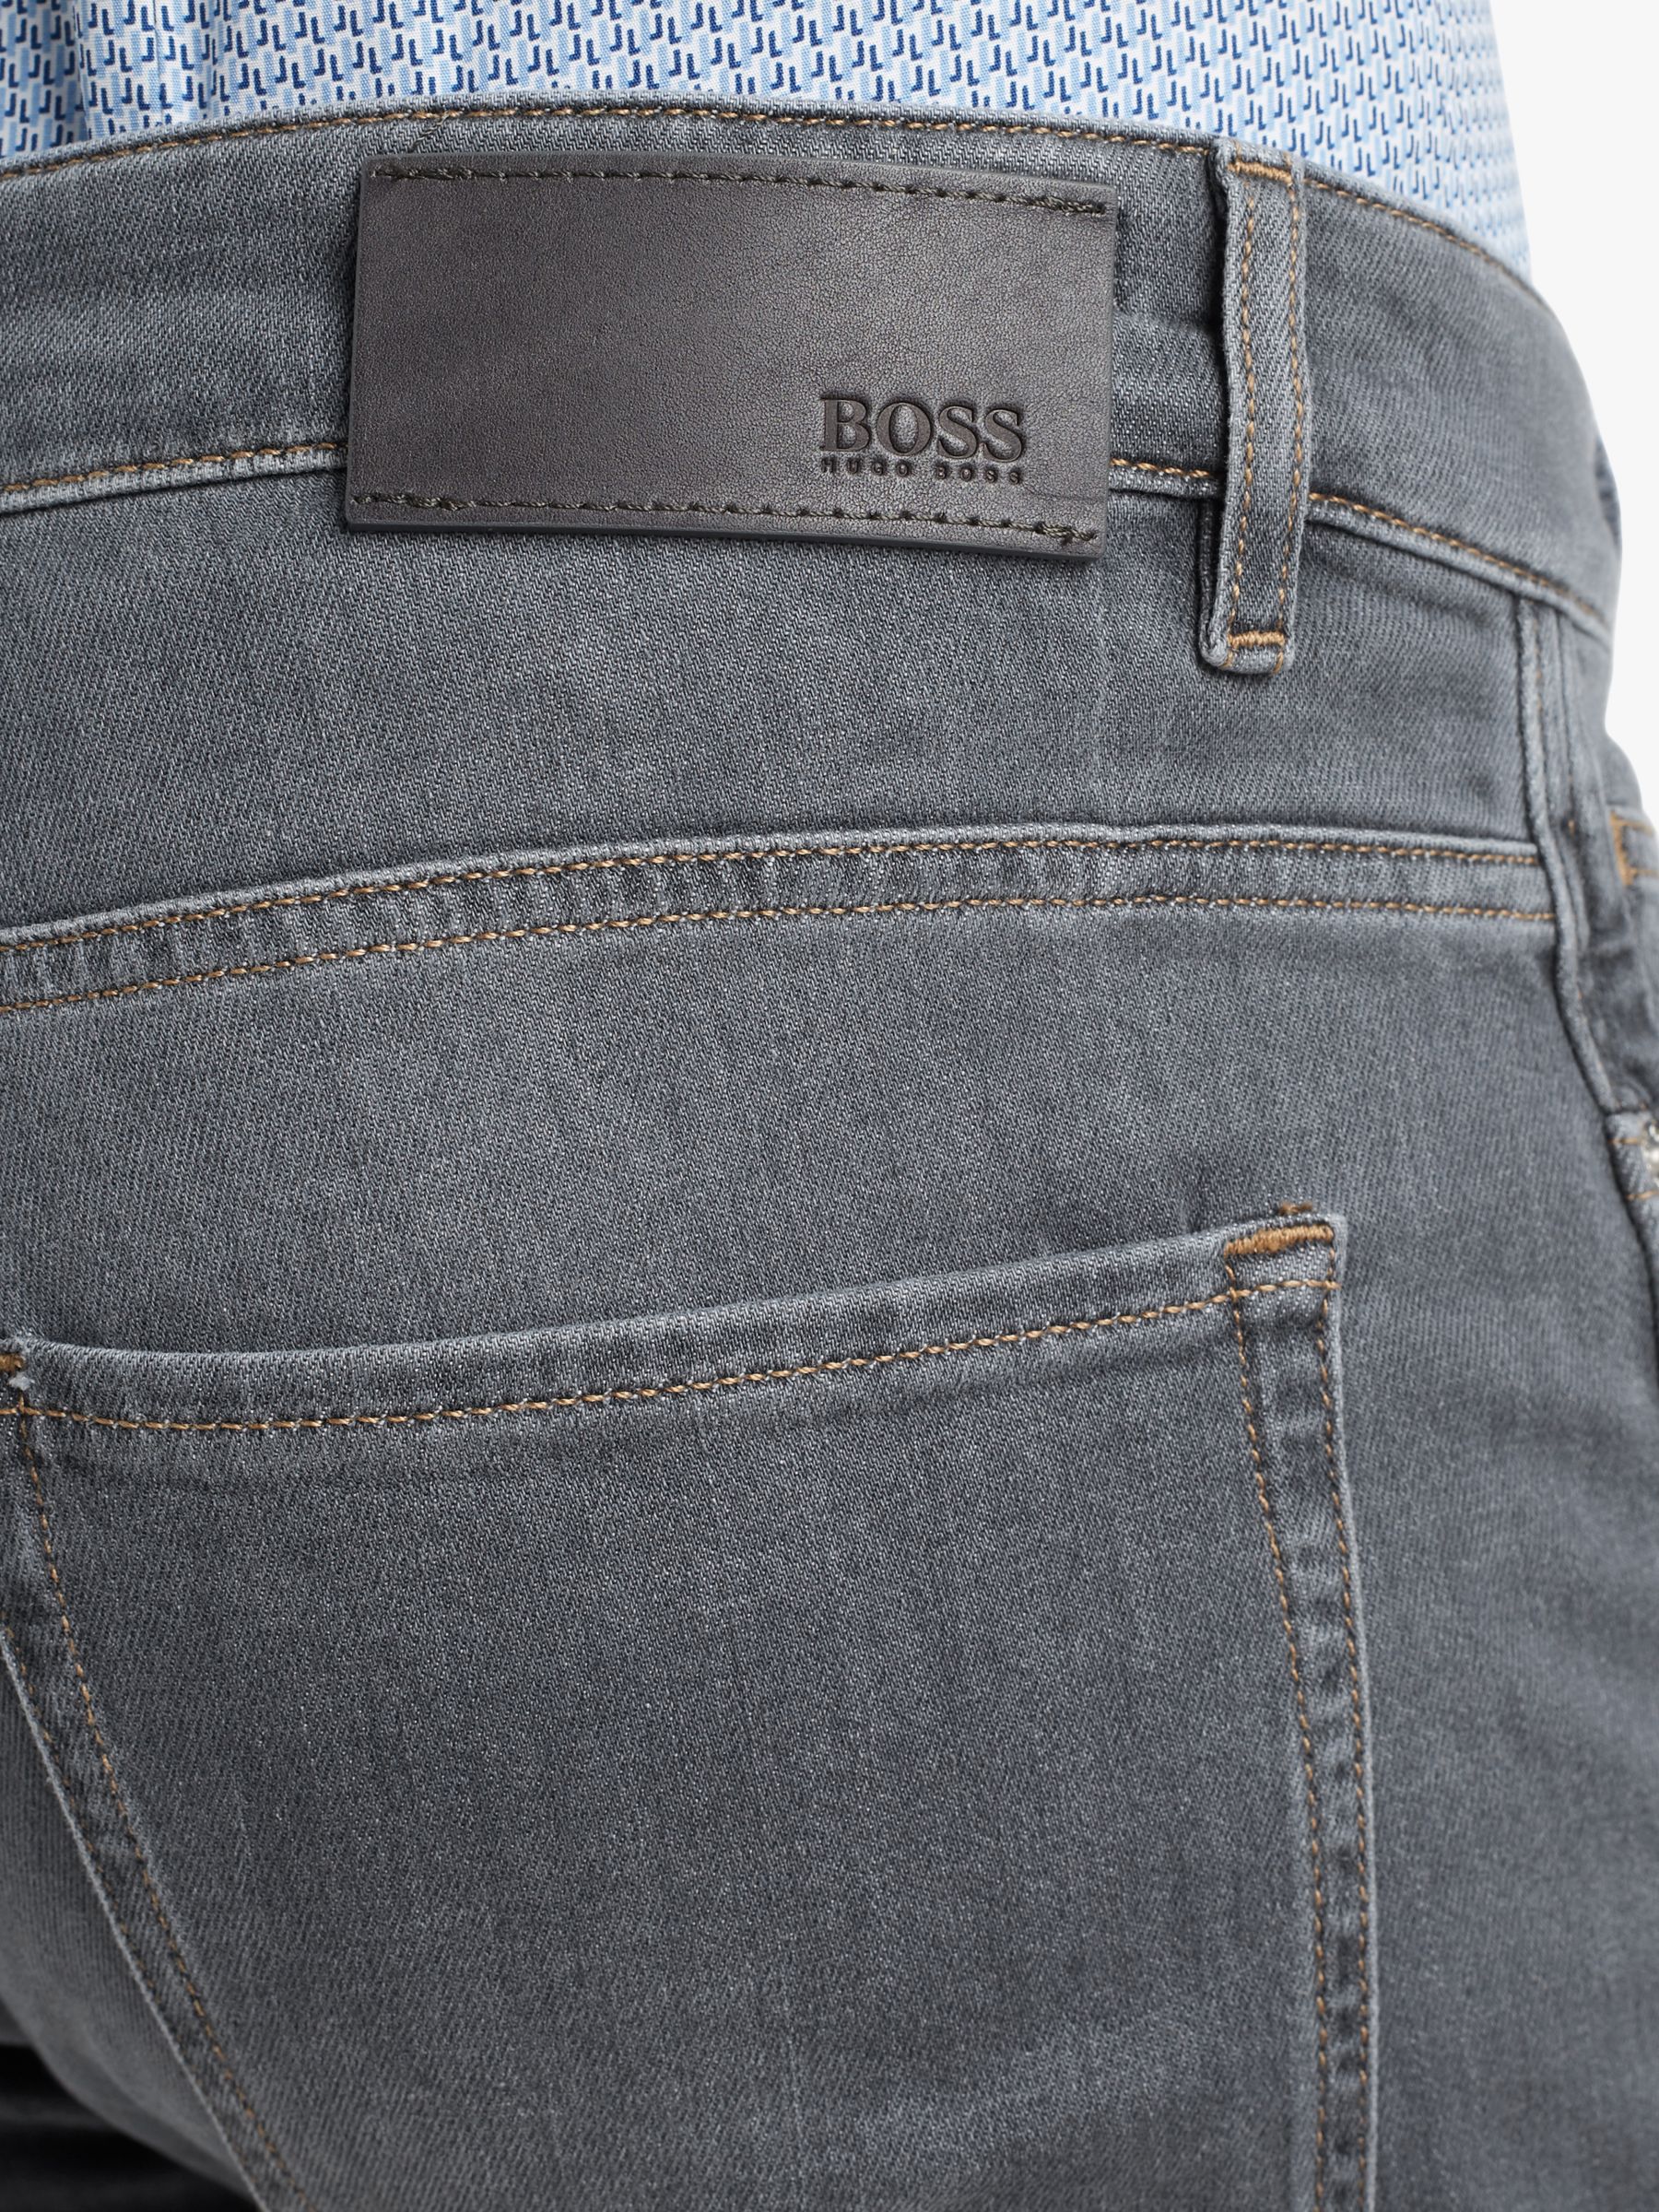 hugo boss jeans grey